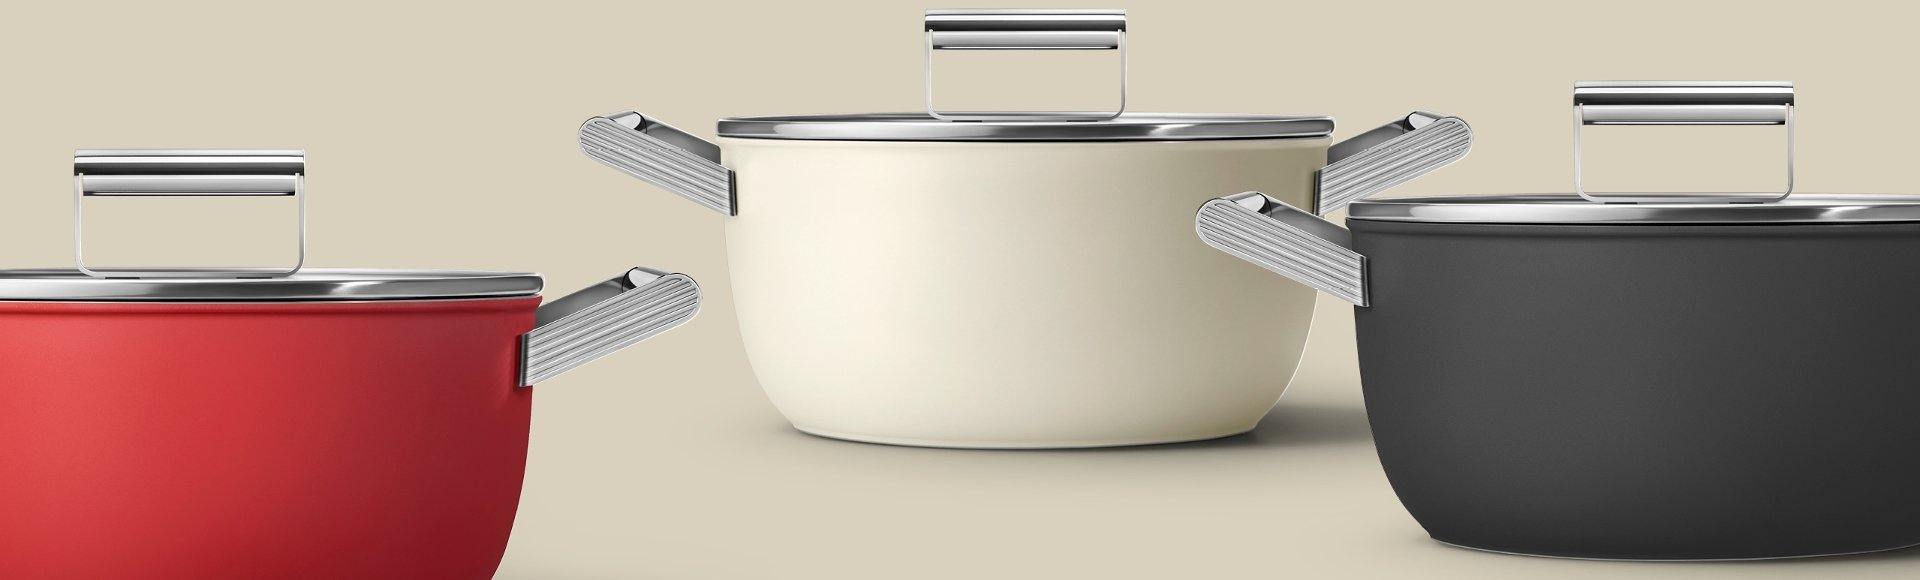 Smeg Cookware 50's Style Cam Kapaklı Tencere Krem Bonvagon